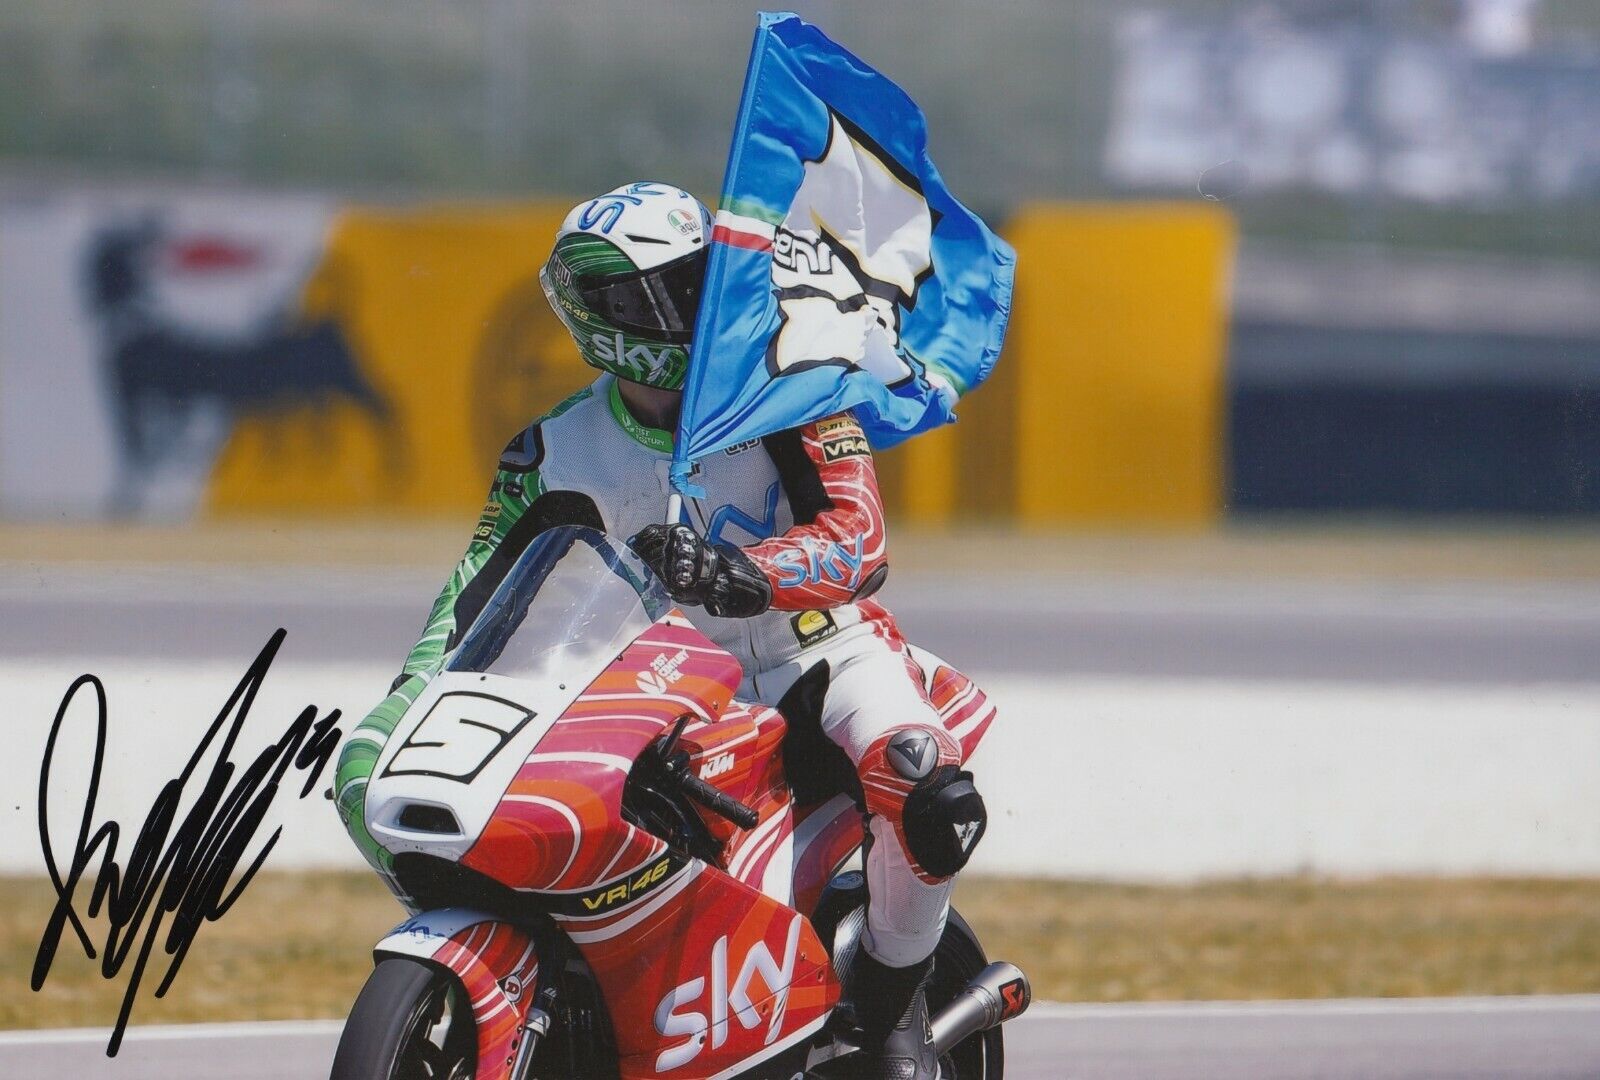 Romano Fenati Hand Signed 12x8 Photo Poster painting - MotoGP Autograph 2.